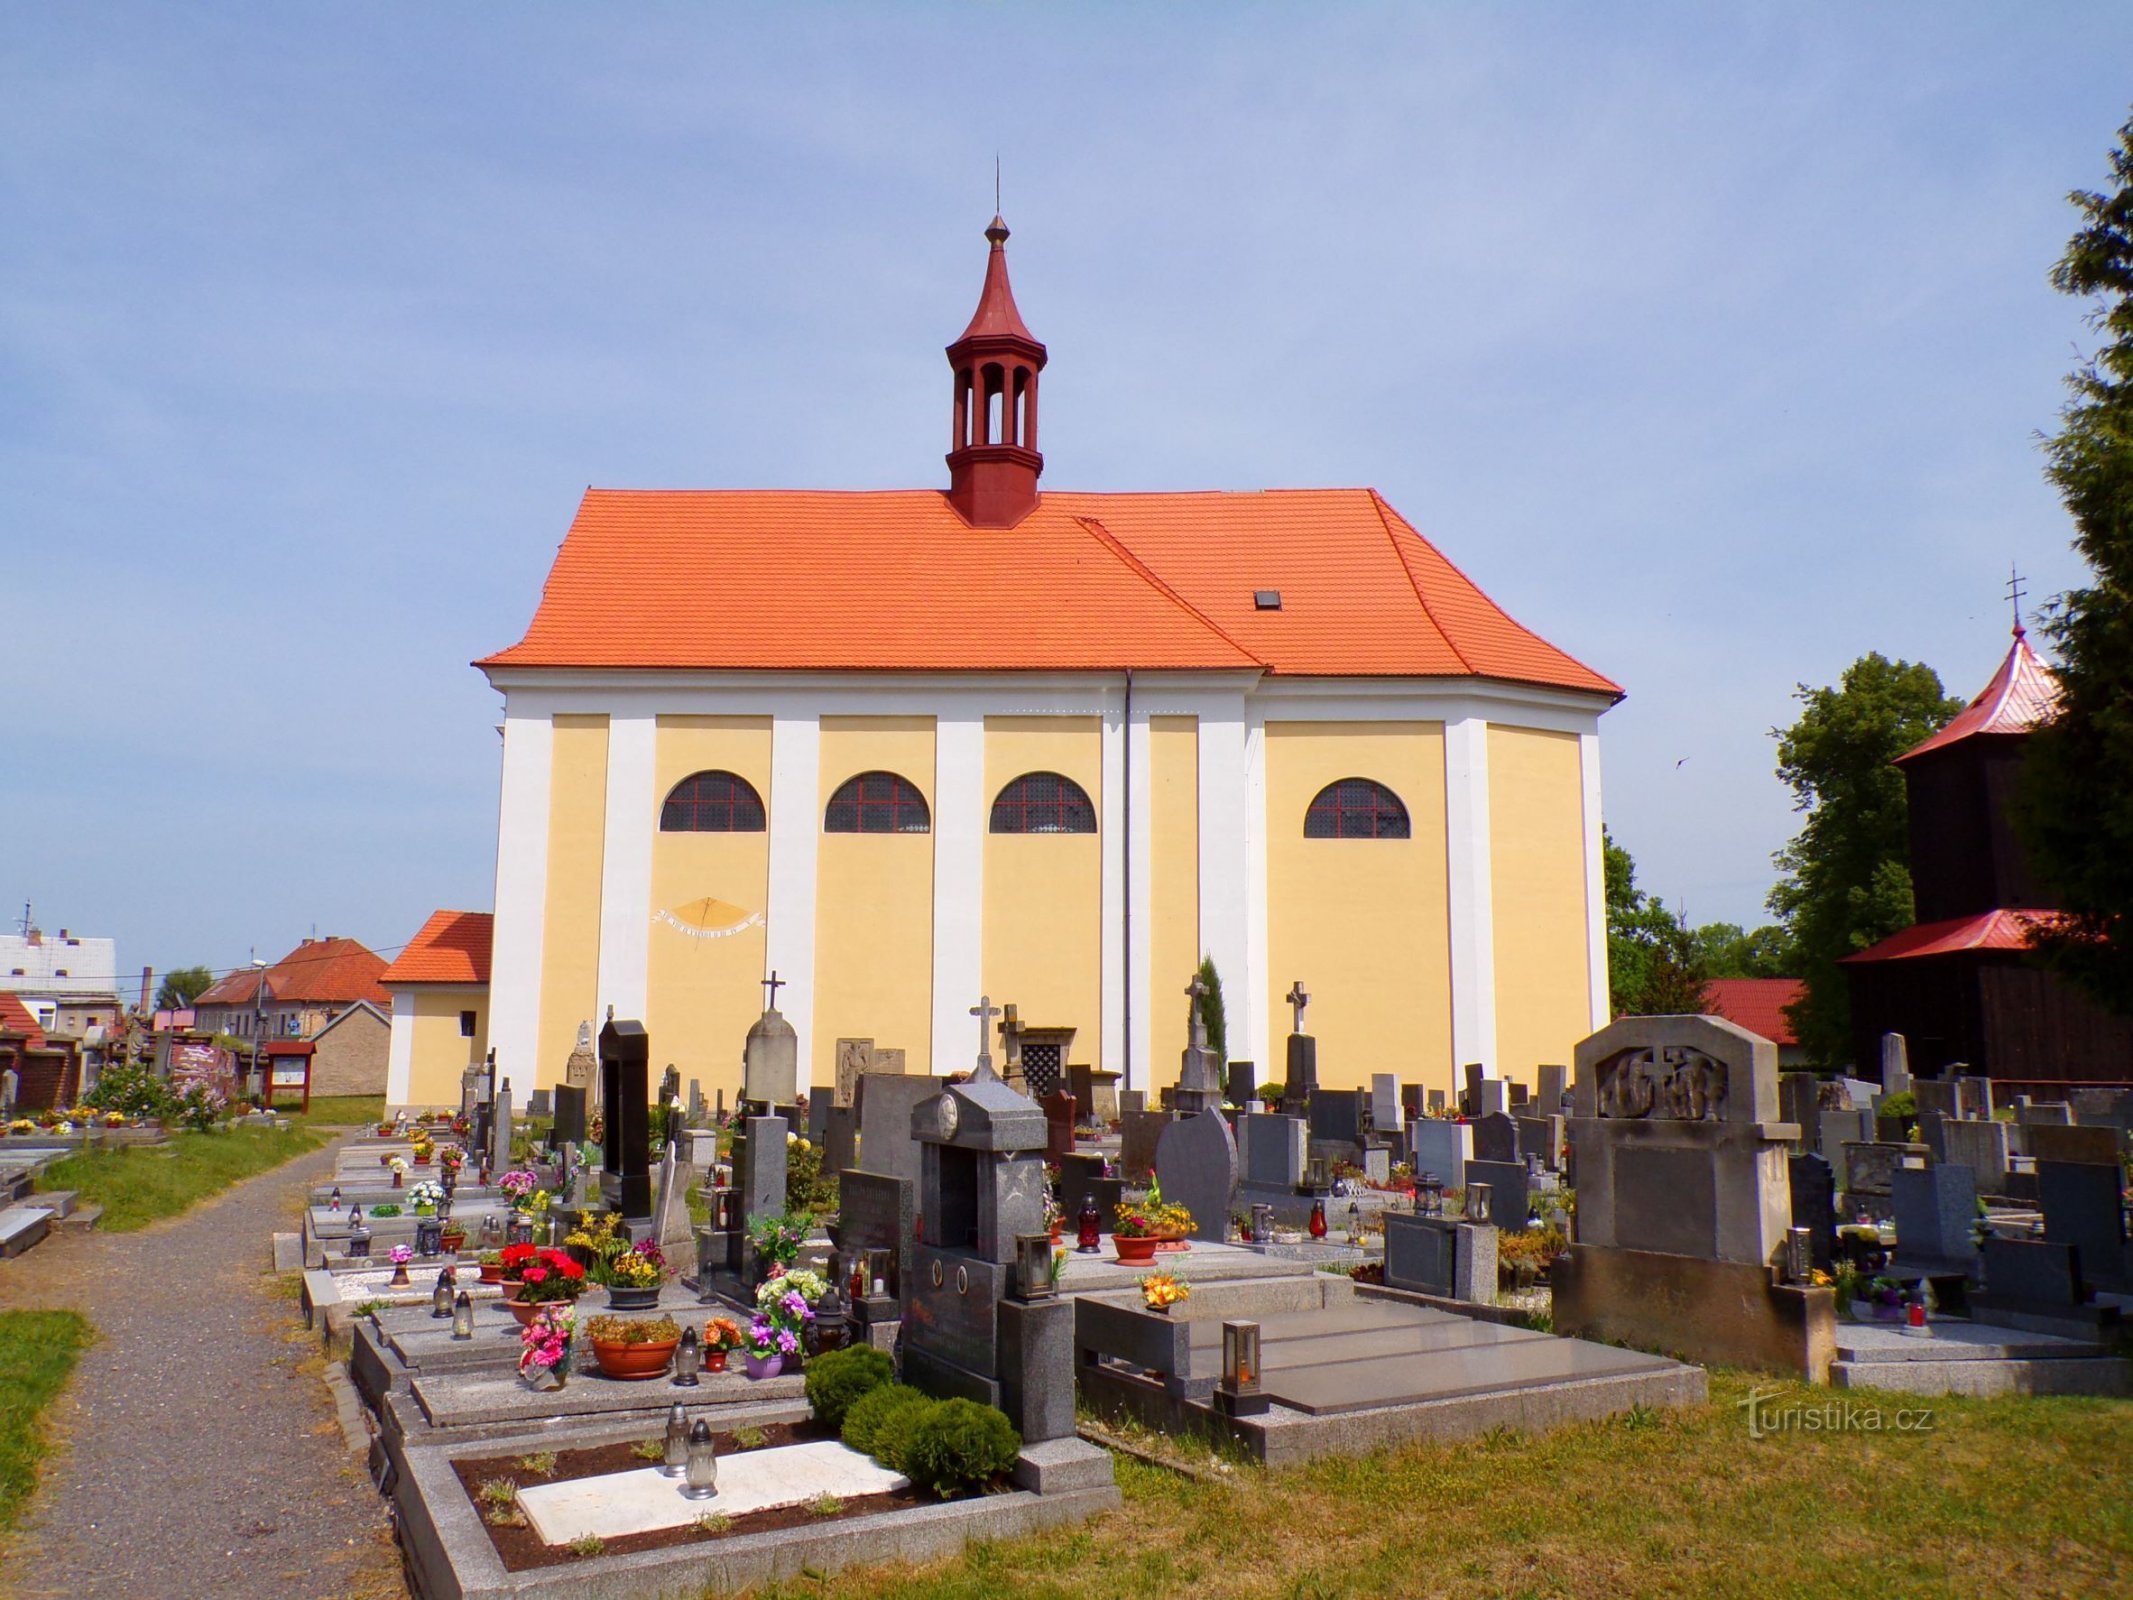 Church of St. Michael the Archangel (Borohrádek, 20.5.2022/XNUMX/XNUMX)